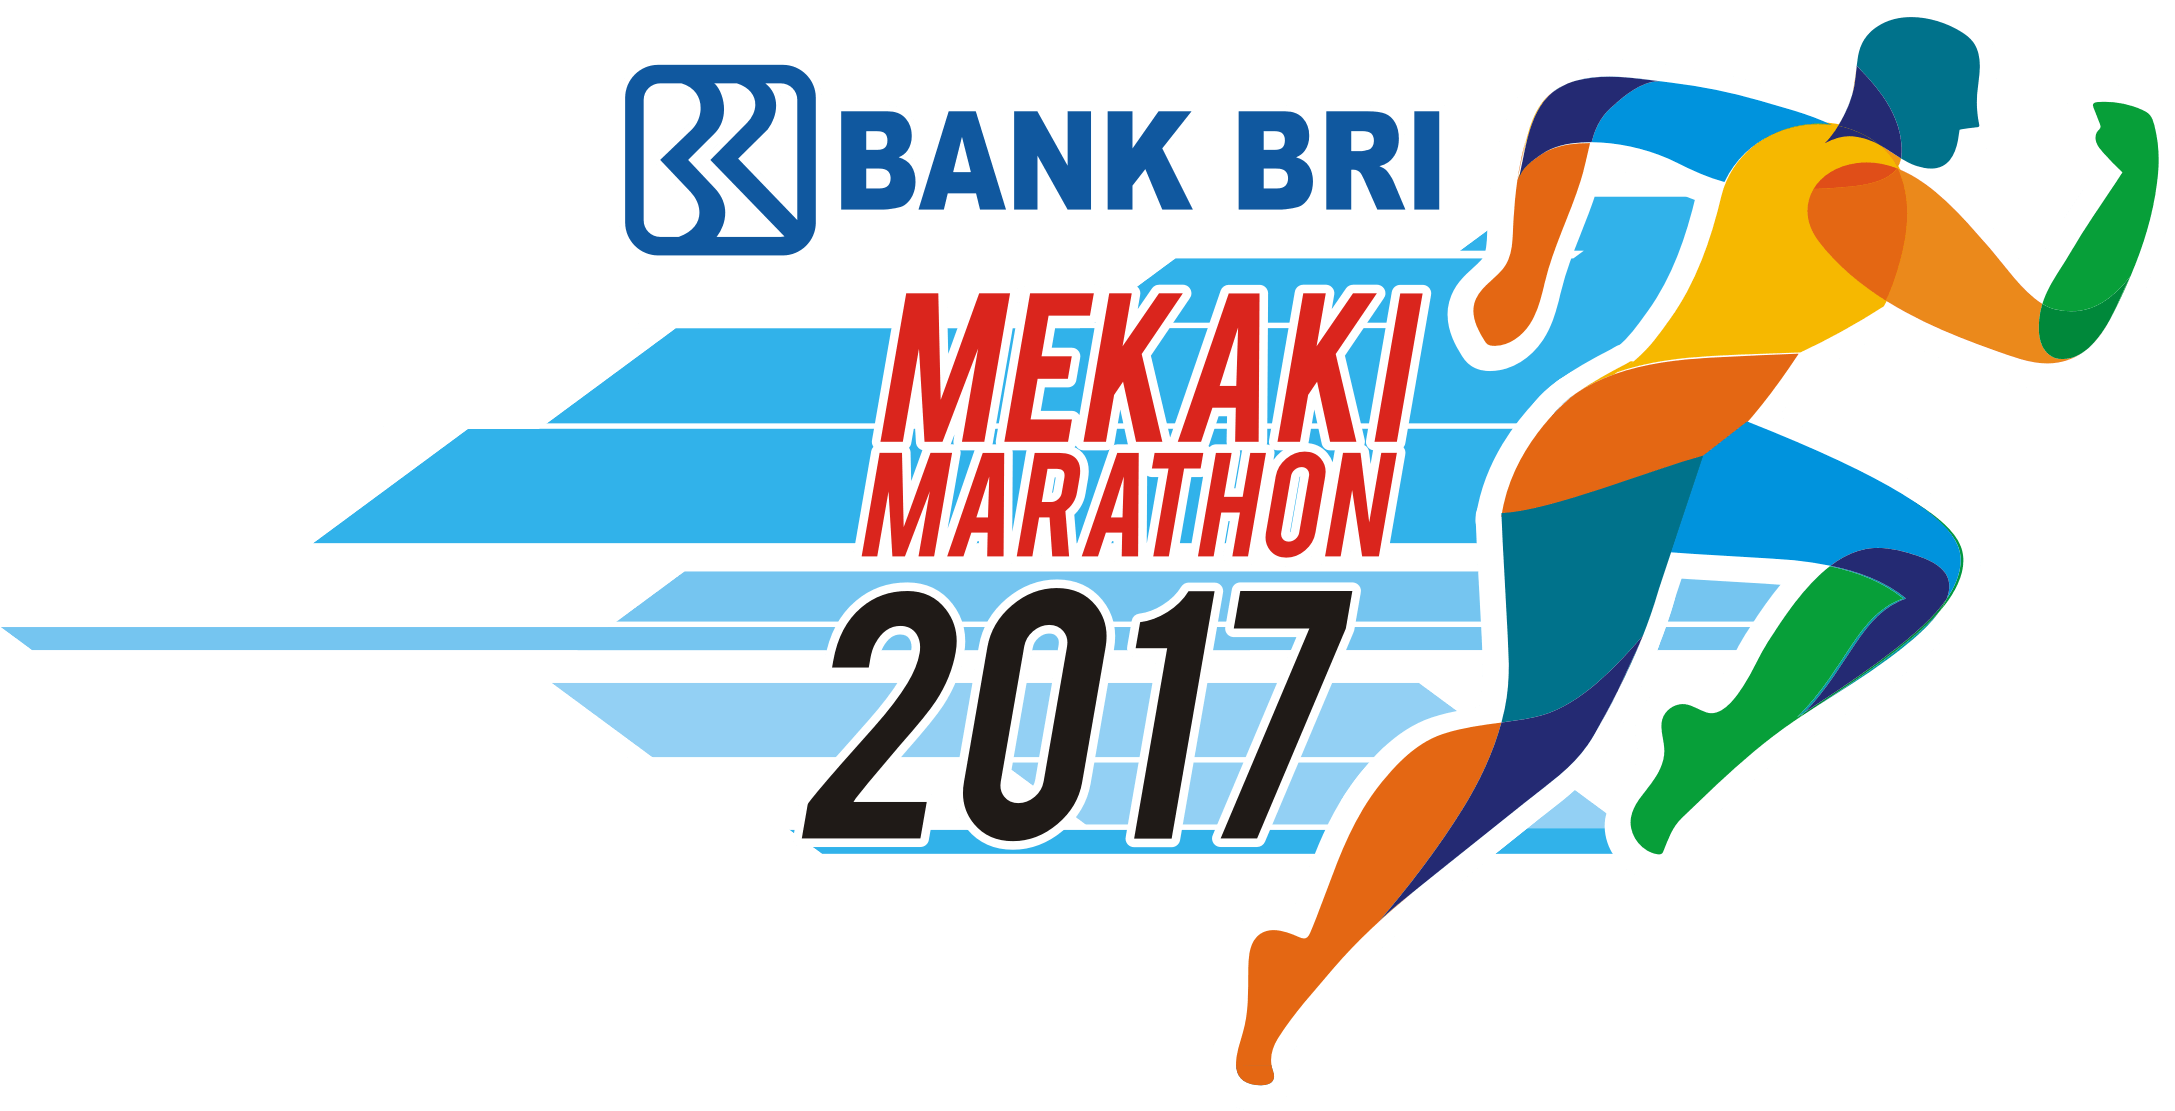 Marathon Logo - Image result for marathon logo | Marathon | Marathon logo, Marathon ...